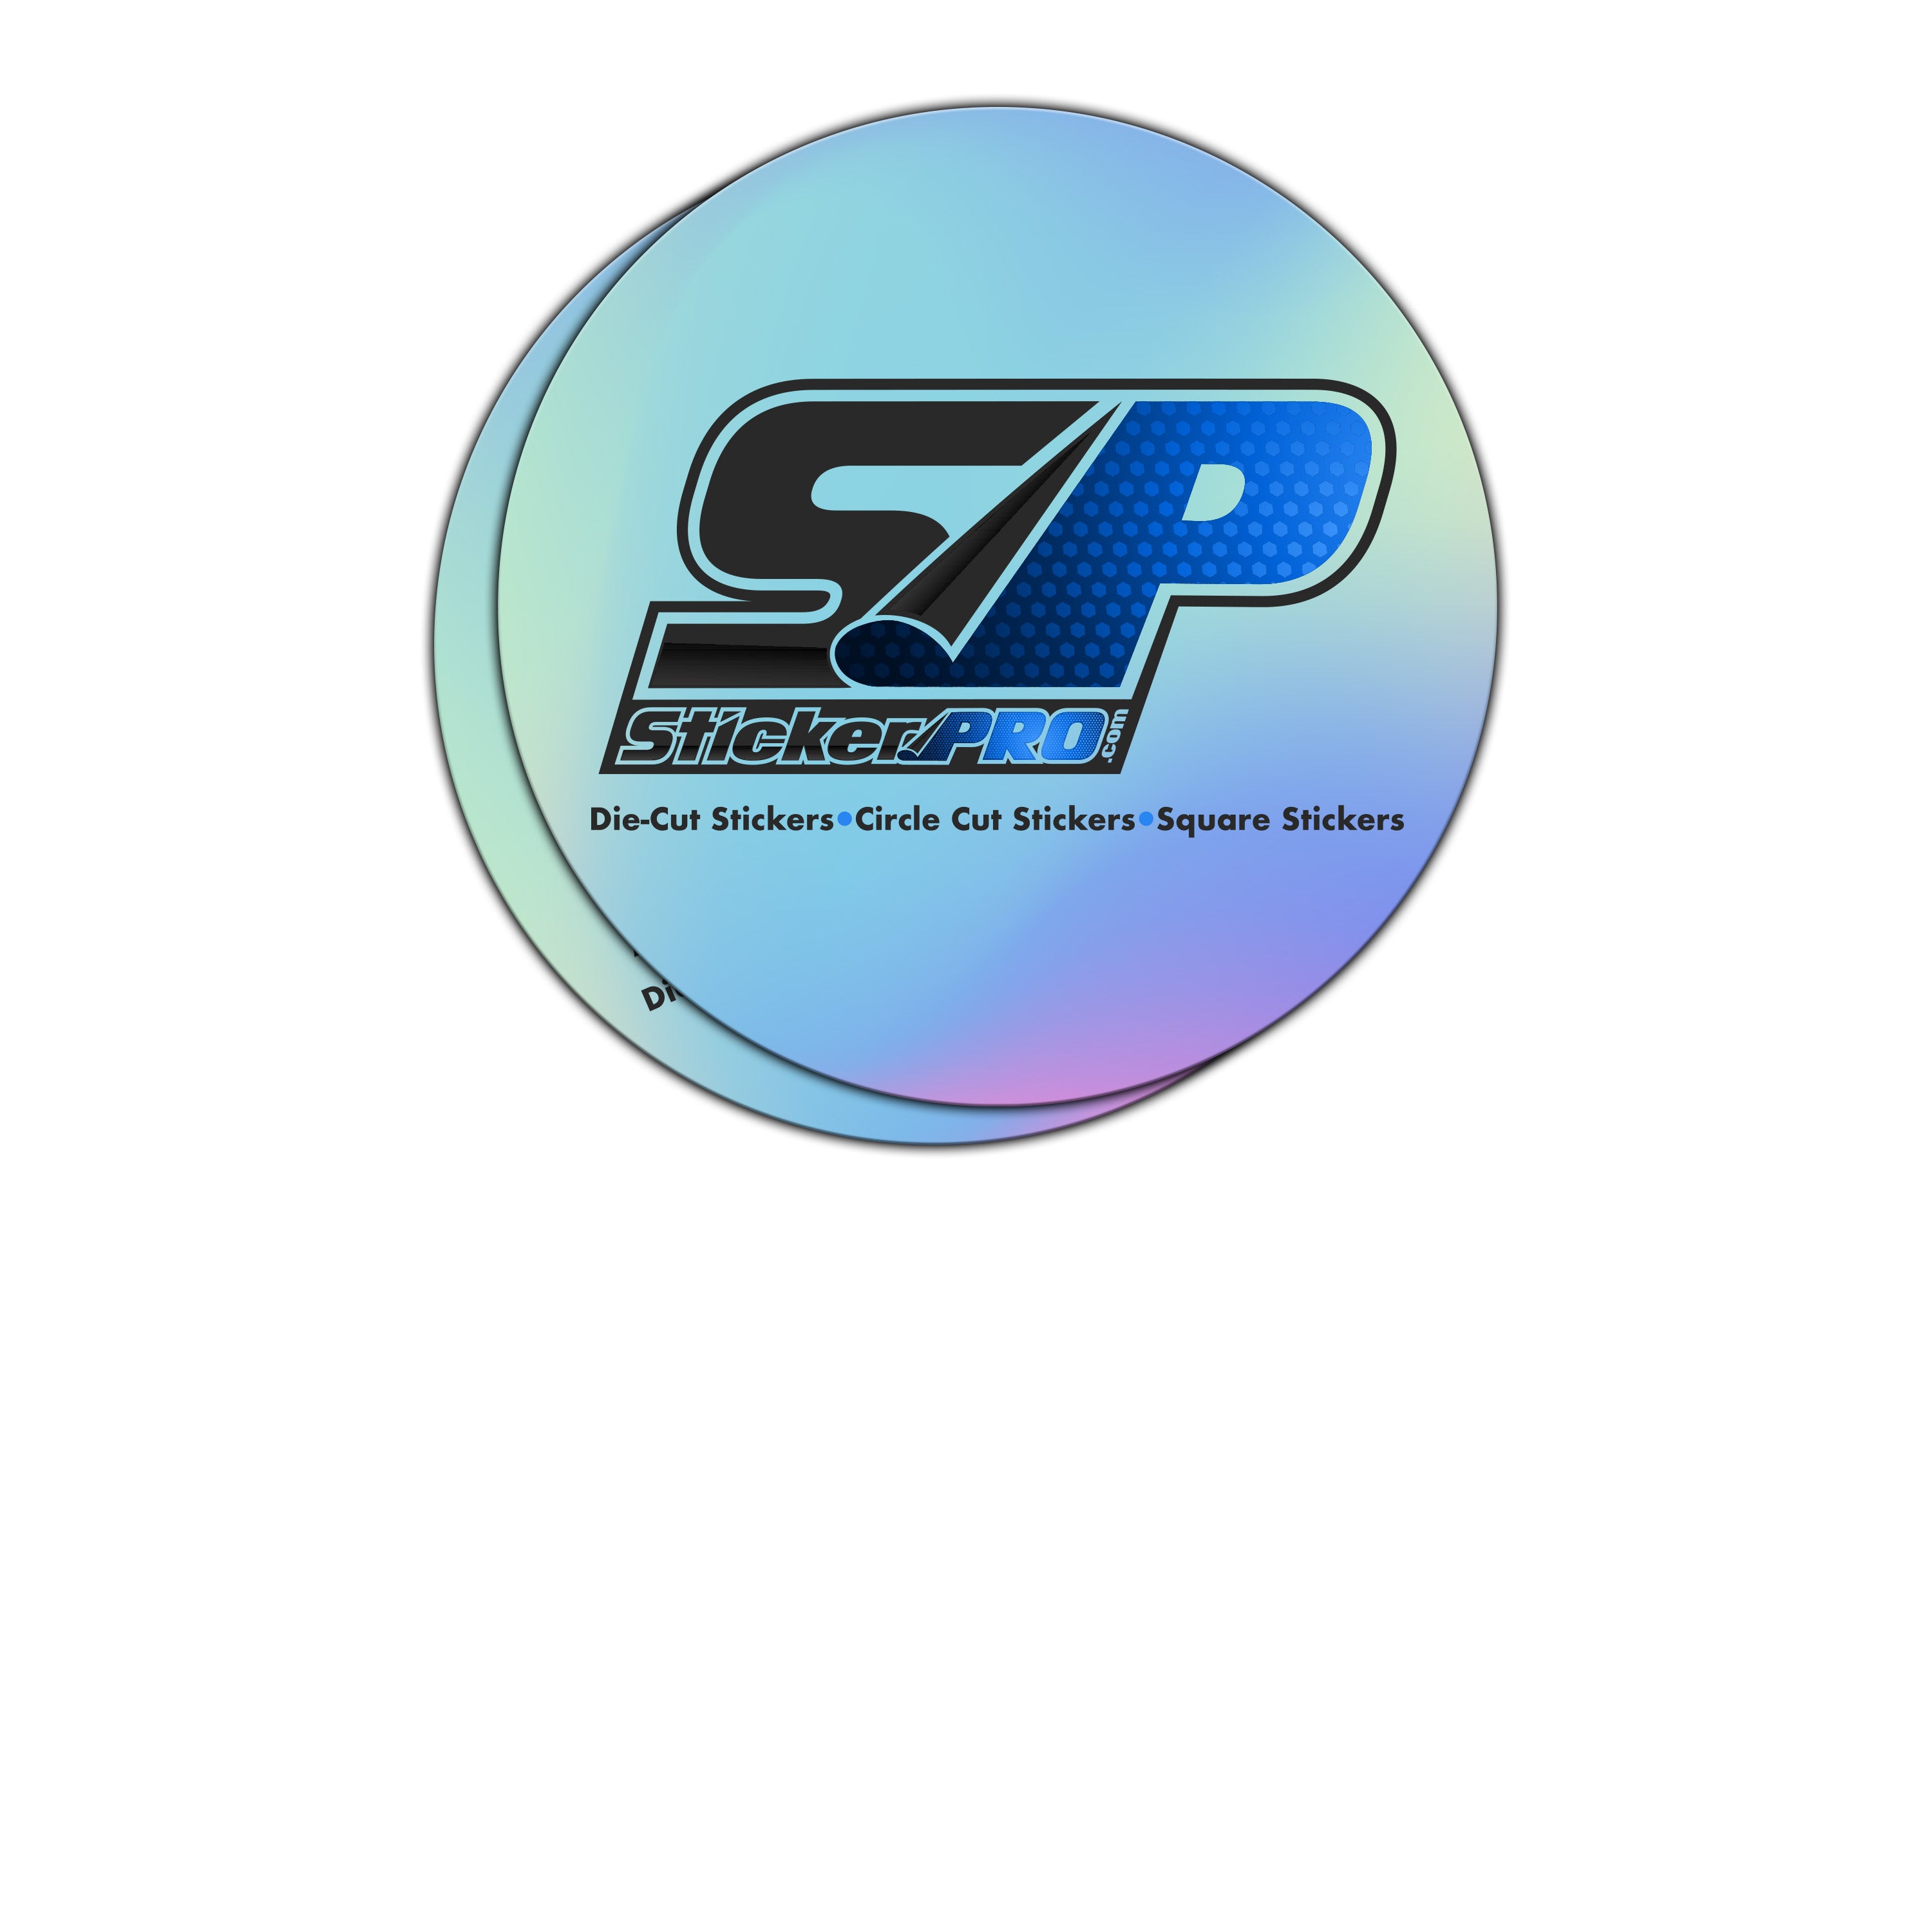 Sticker Pros - Sticker Pro USA - Holographic Stickers - StickerPRO.com